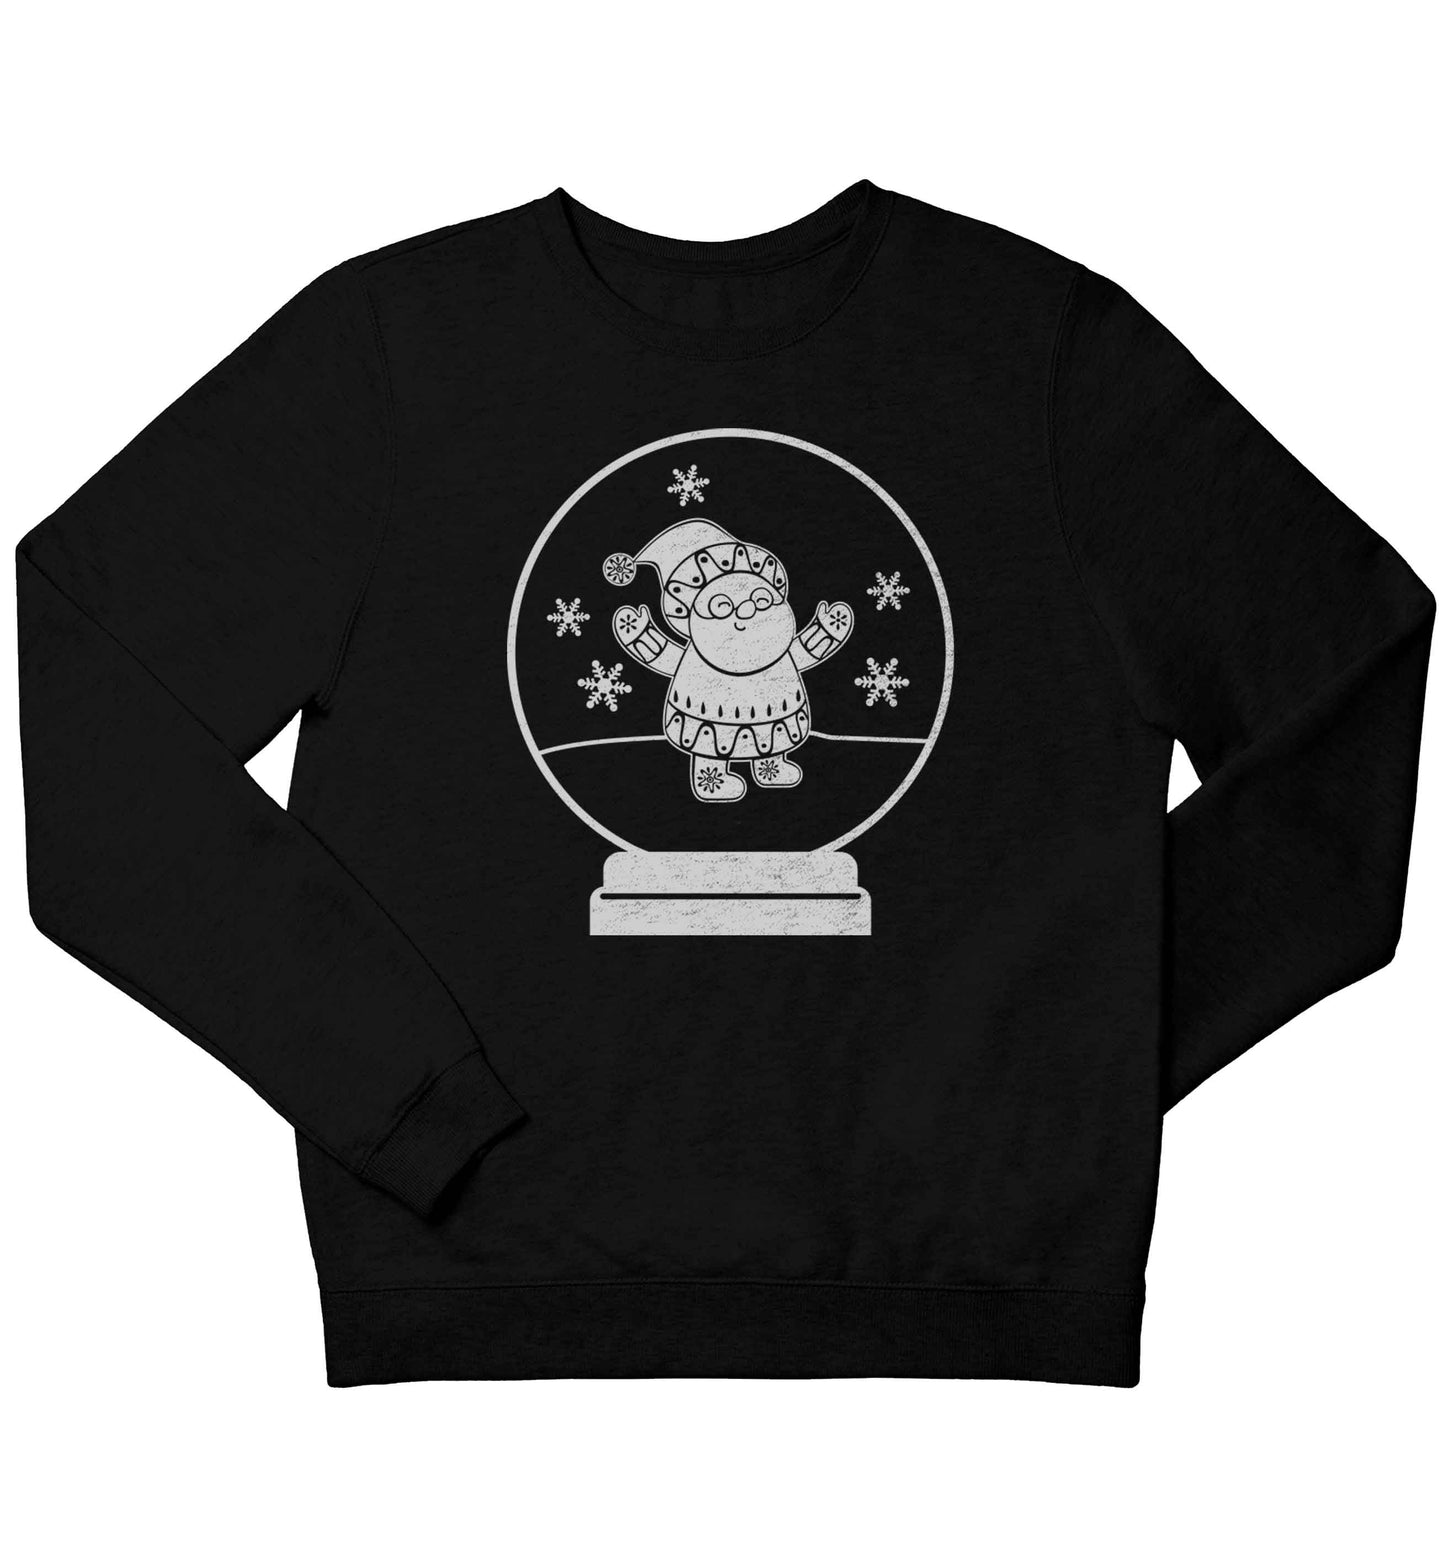 Santa snowglobe children's black sweater 12-13 Years